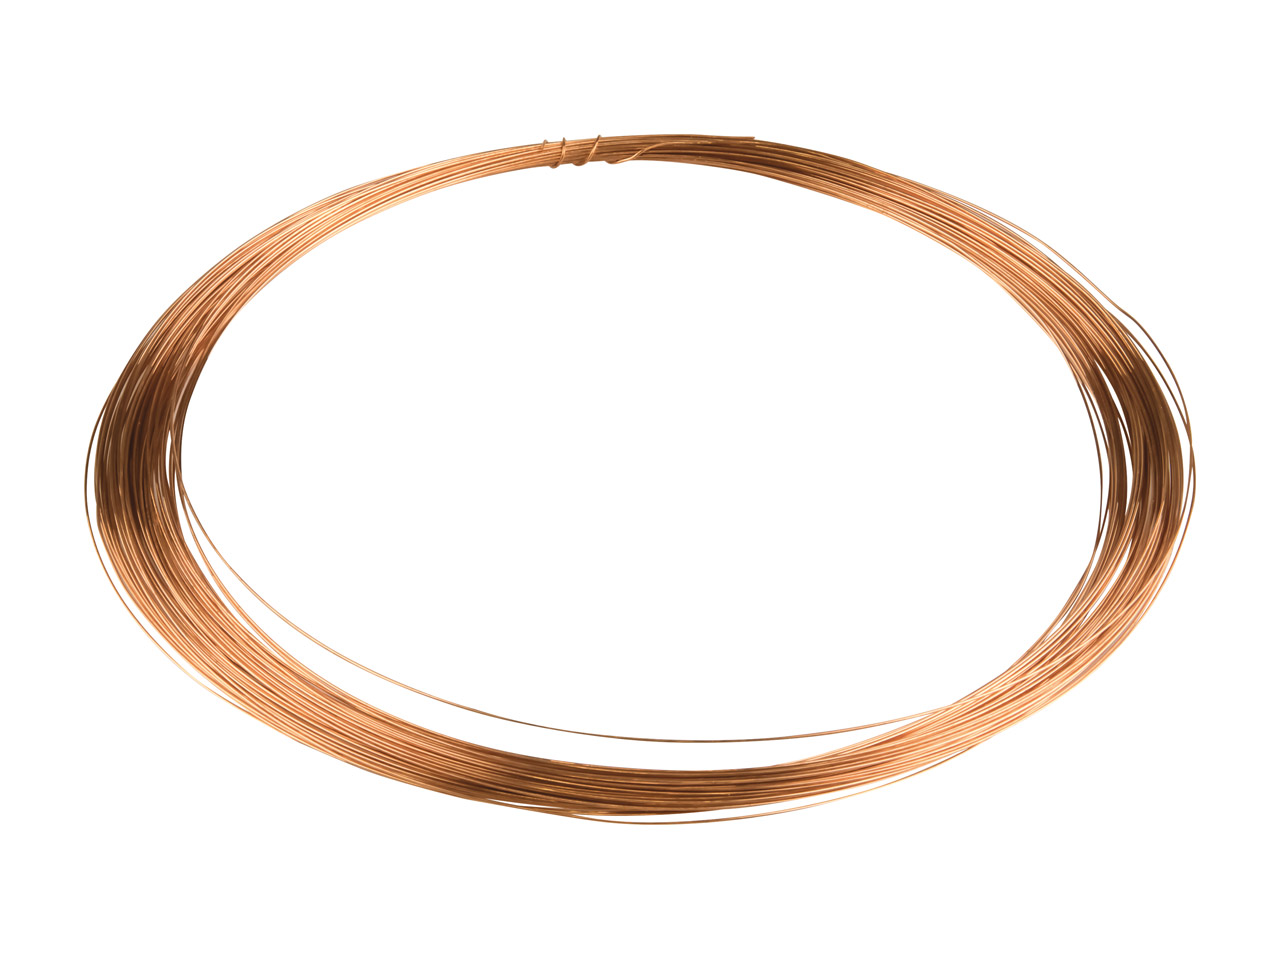 Медная проволока с изоляцией. Титан проволока 0.4 мм. Wire: 0.5²*2 Copper wire，l13.5cm. Copper, annealed Soft-drawn.